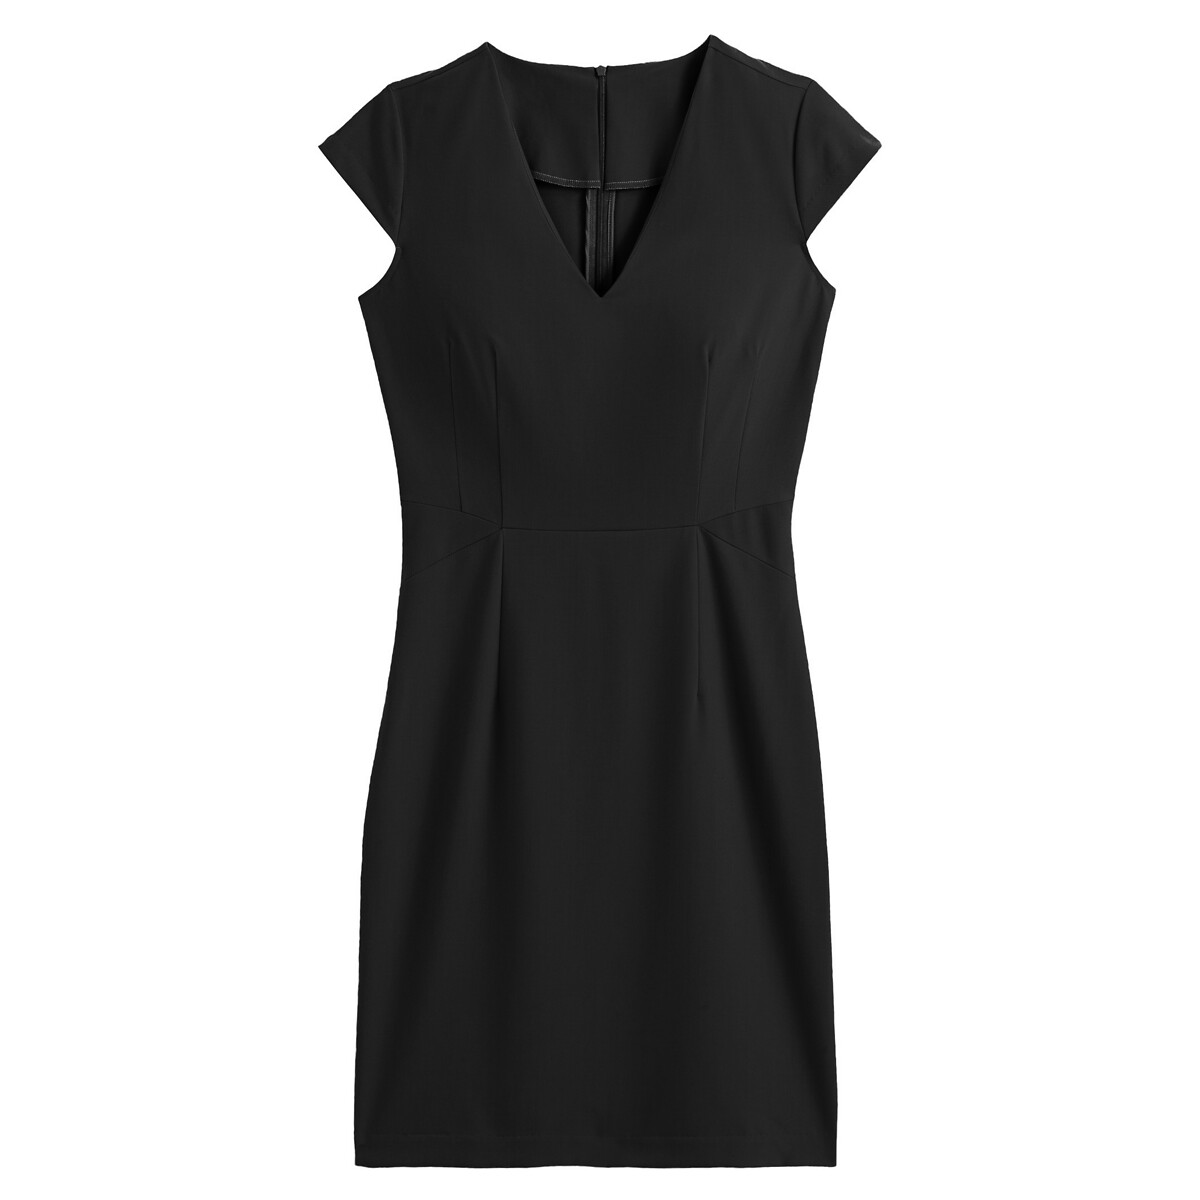 Платье LaRedoute Без рукавов в форме футляра 36 (FR) - 42 (RUS) черный, размер 36 (FR) - 42 (RUS) Без рукавов в форме футляра 36 (FR) - 42 (RUS) черный - фото 5